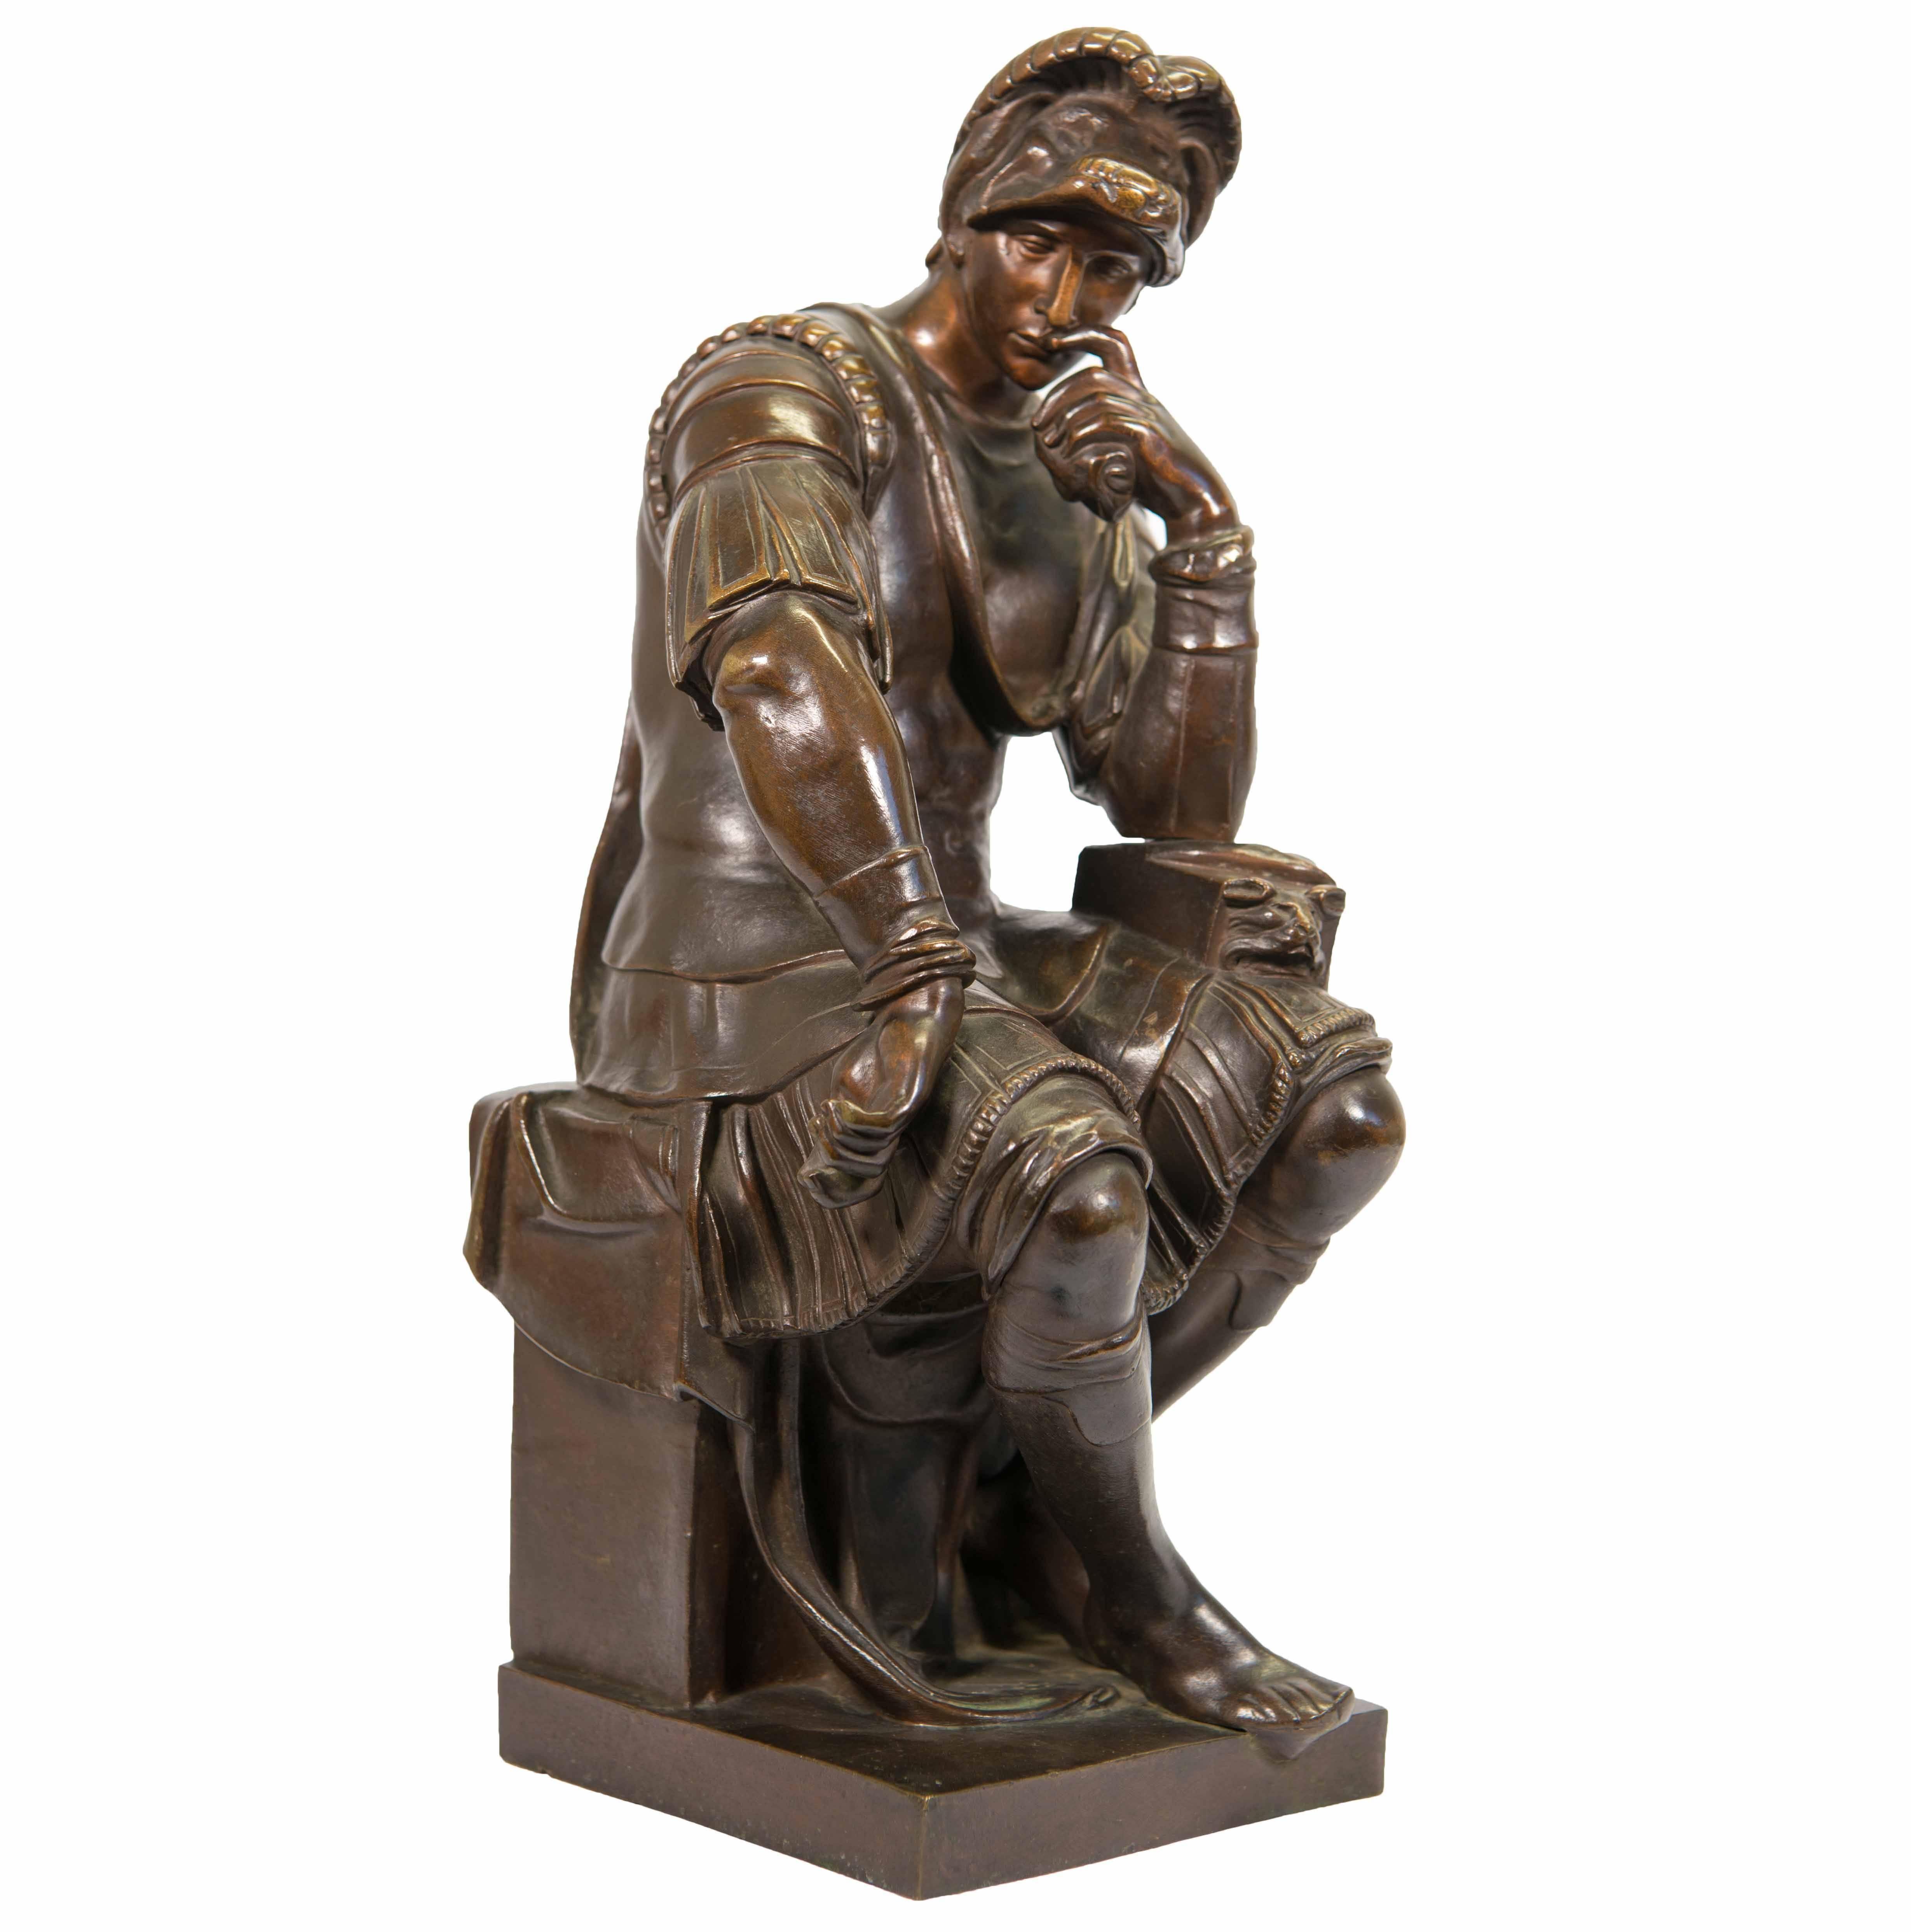 Bronze statue after Michelangelo, Lorenzo De' Medici statue in Florence, Italy